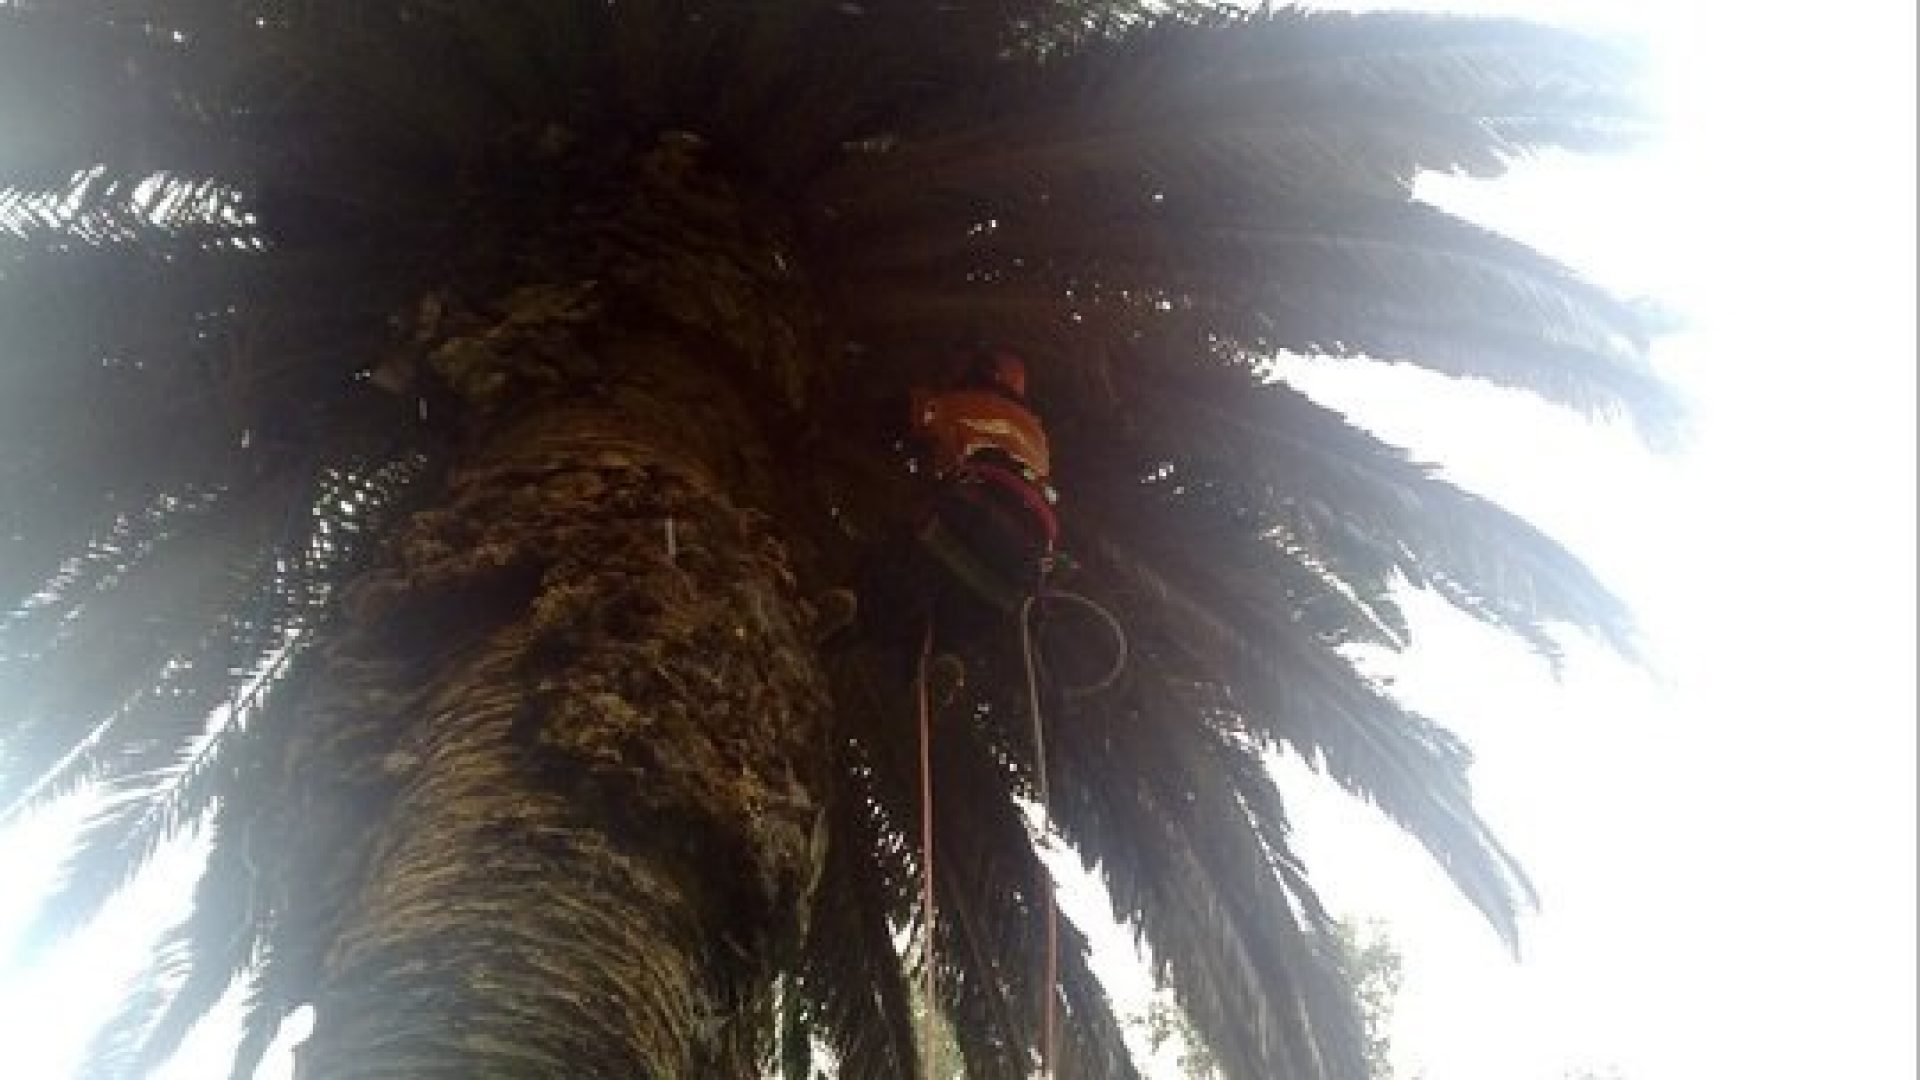 Palm Tree Maintenance